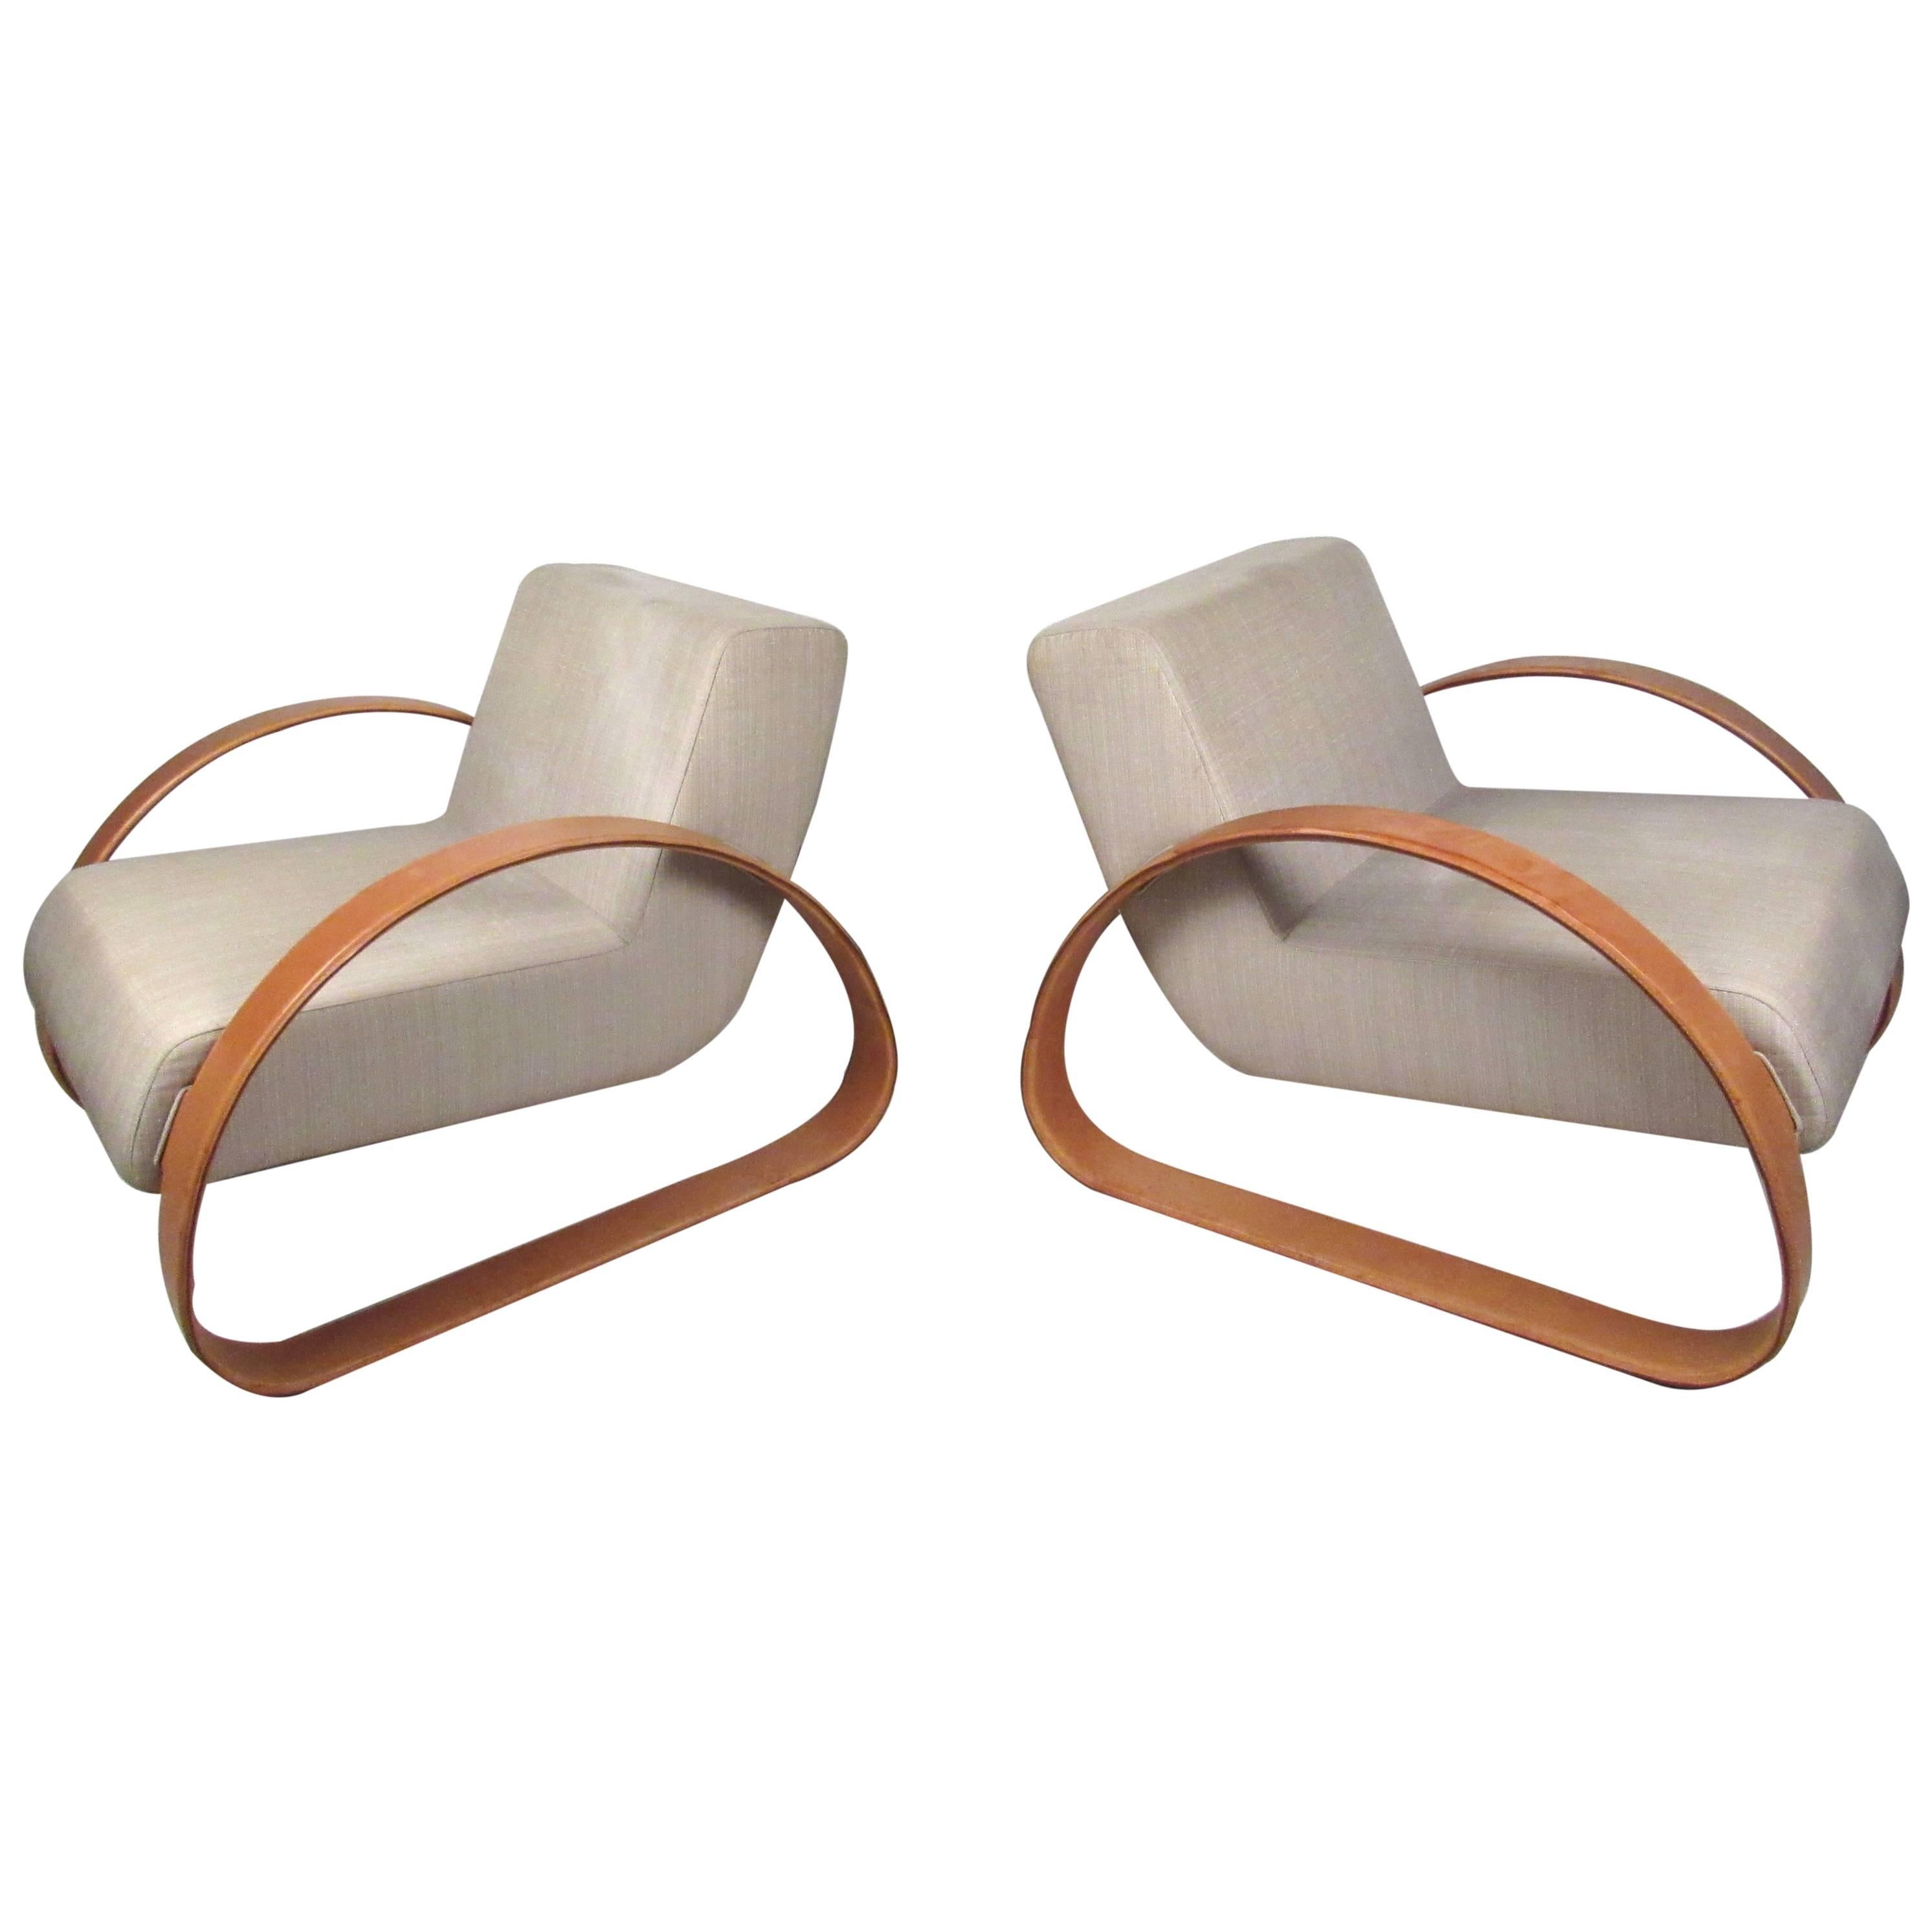 Pair of Modern Italian Lounge Chairs by Armani Casa